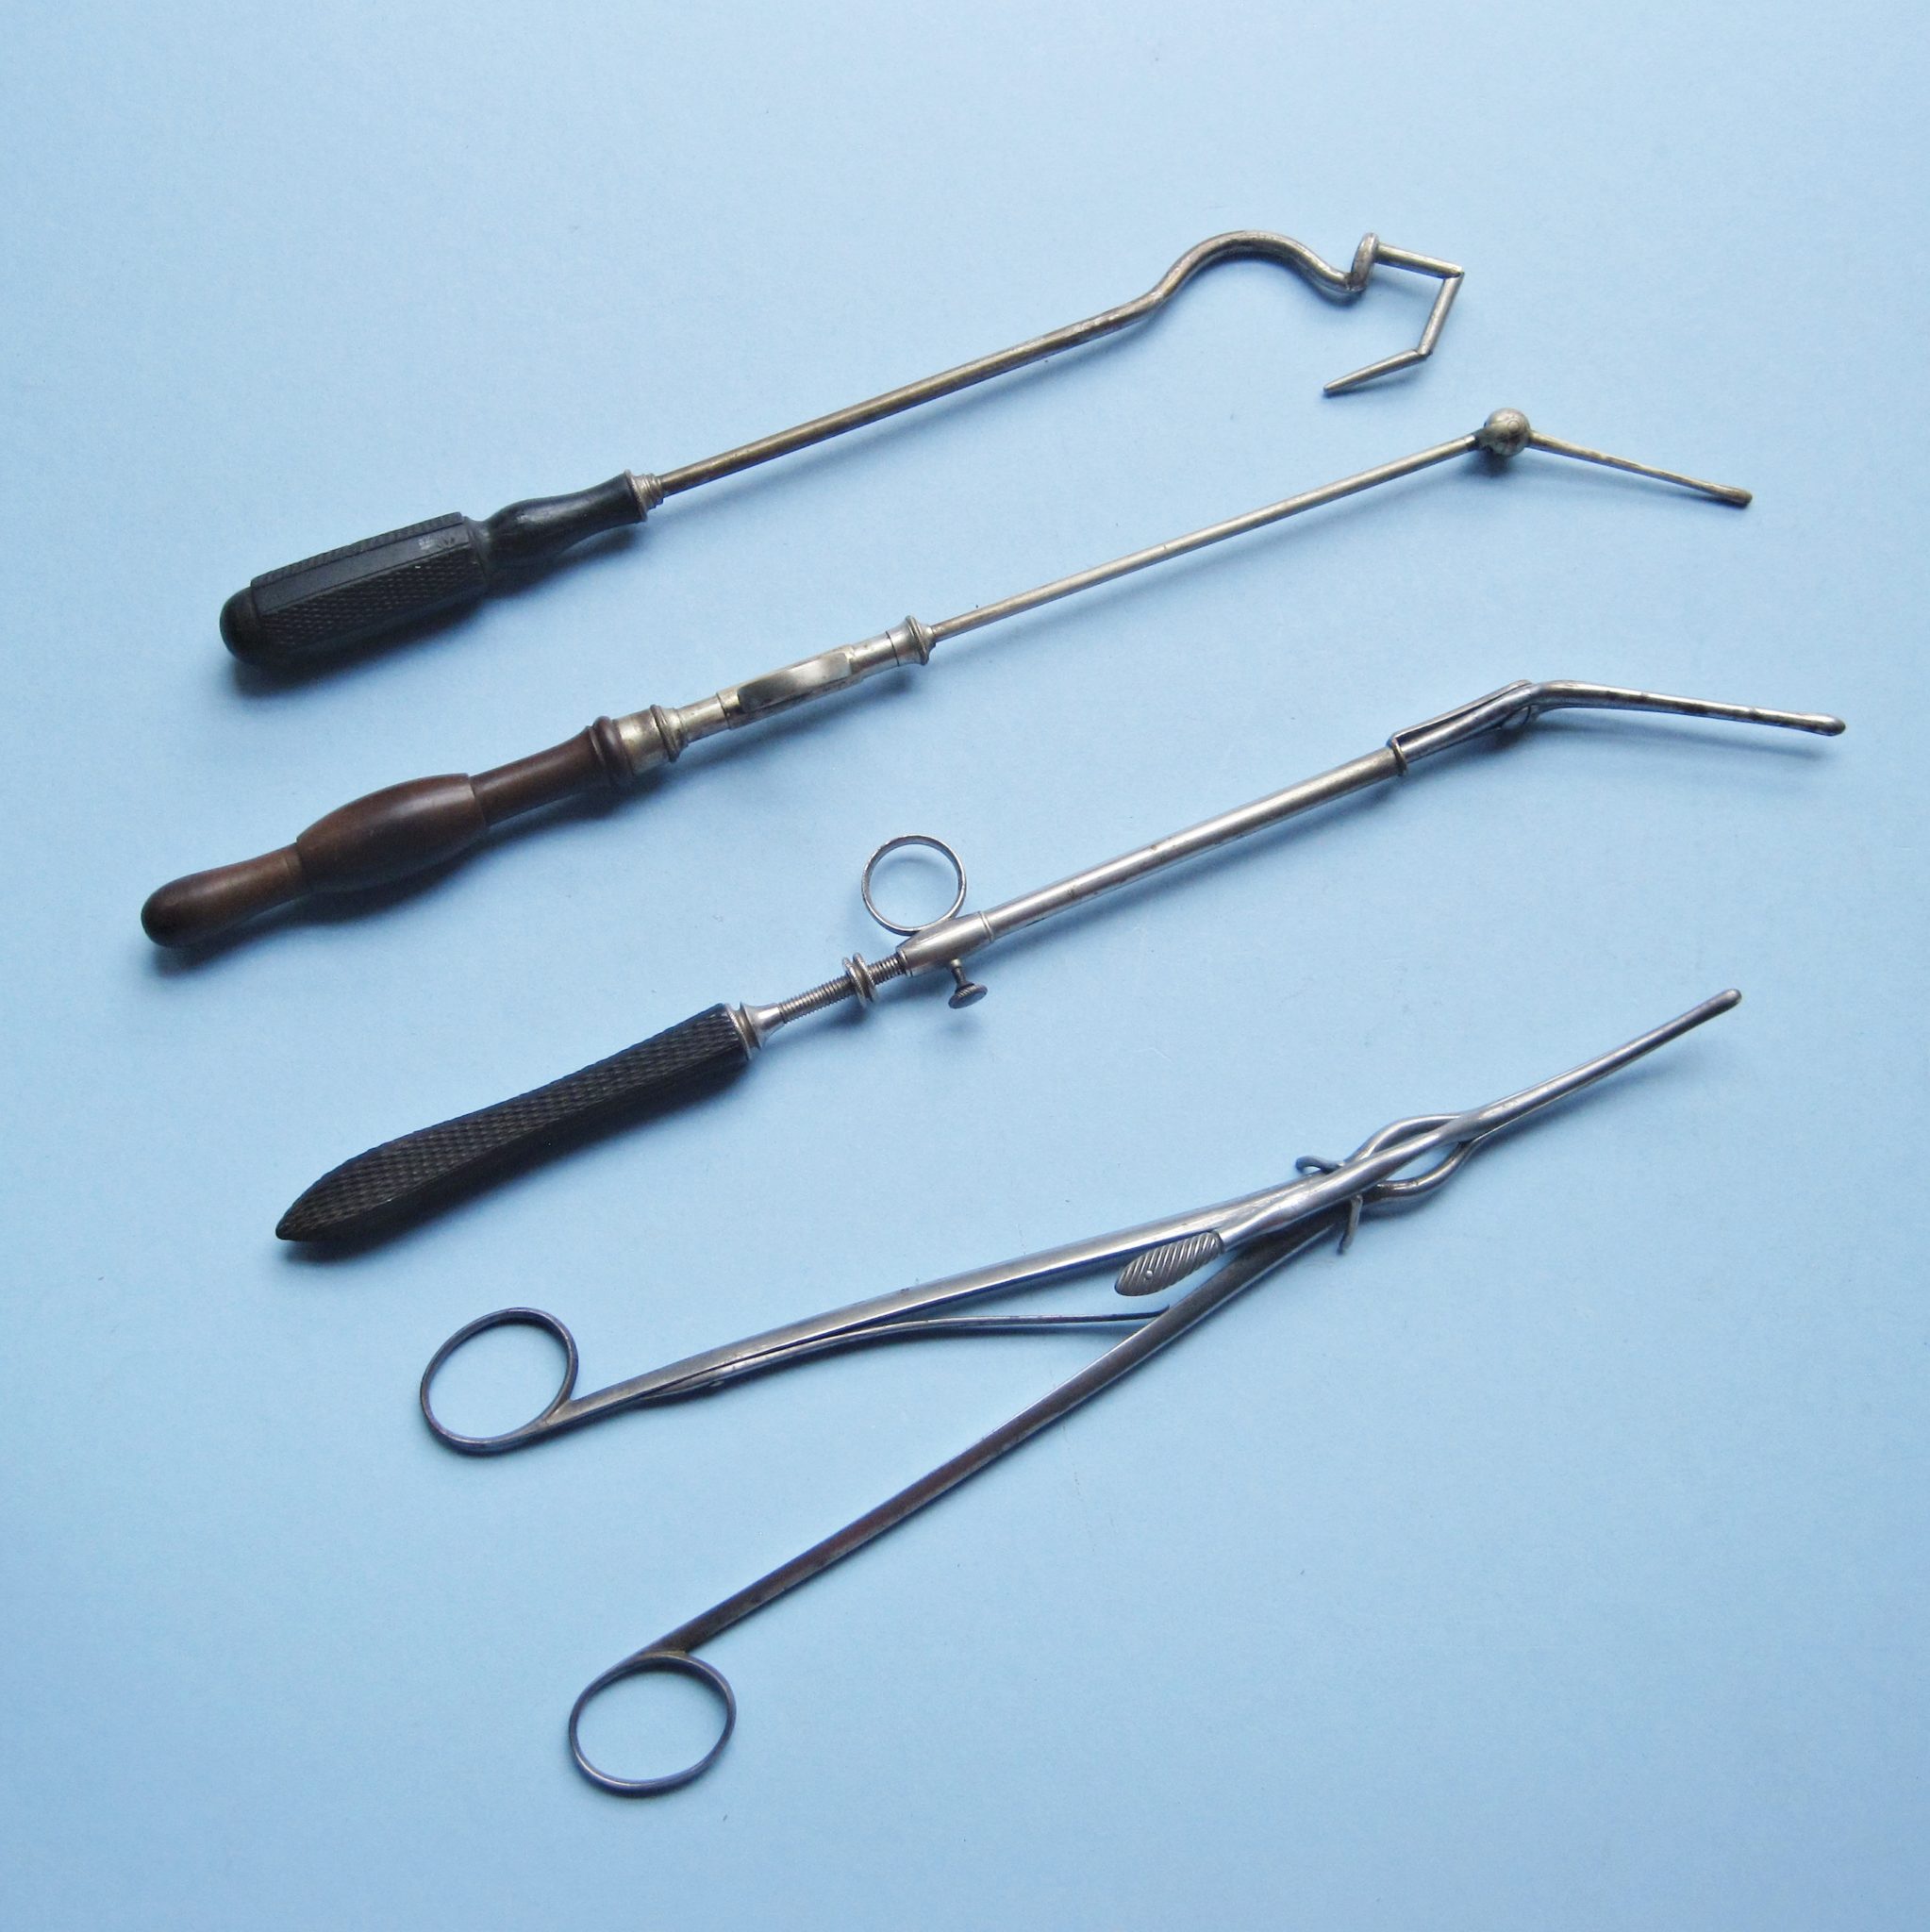 Gynecology: Four C1880 Uterine Instruments